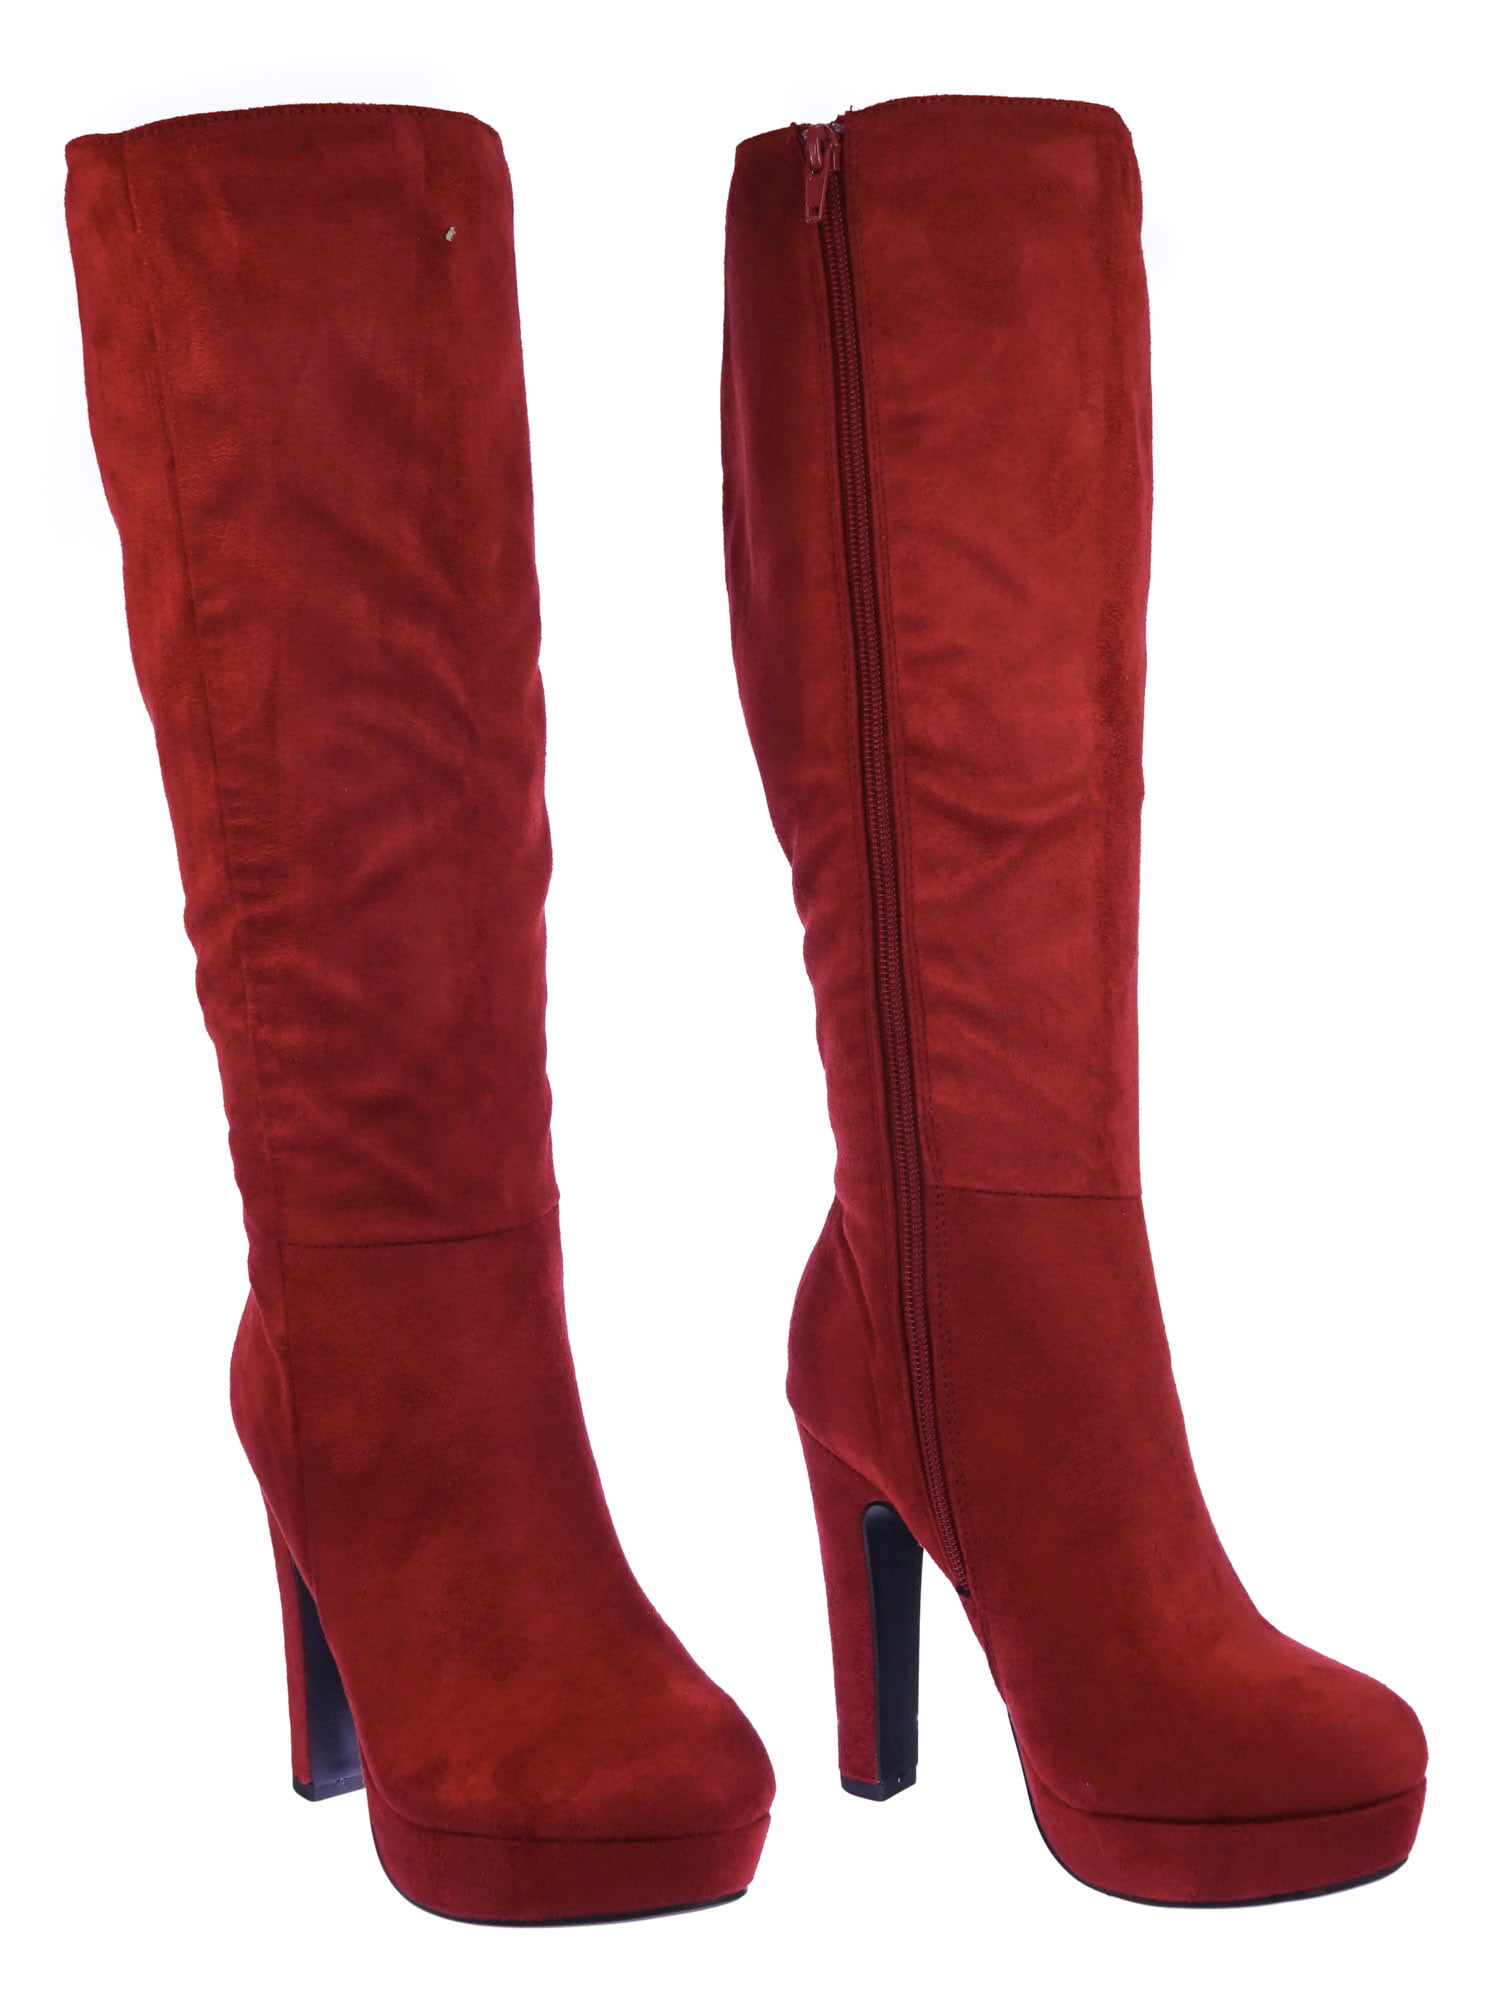 ladies knee high dress boots